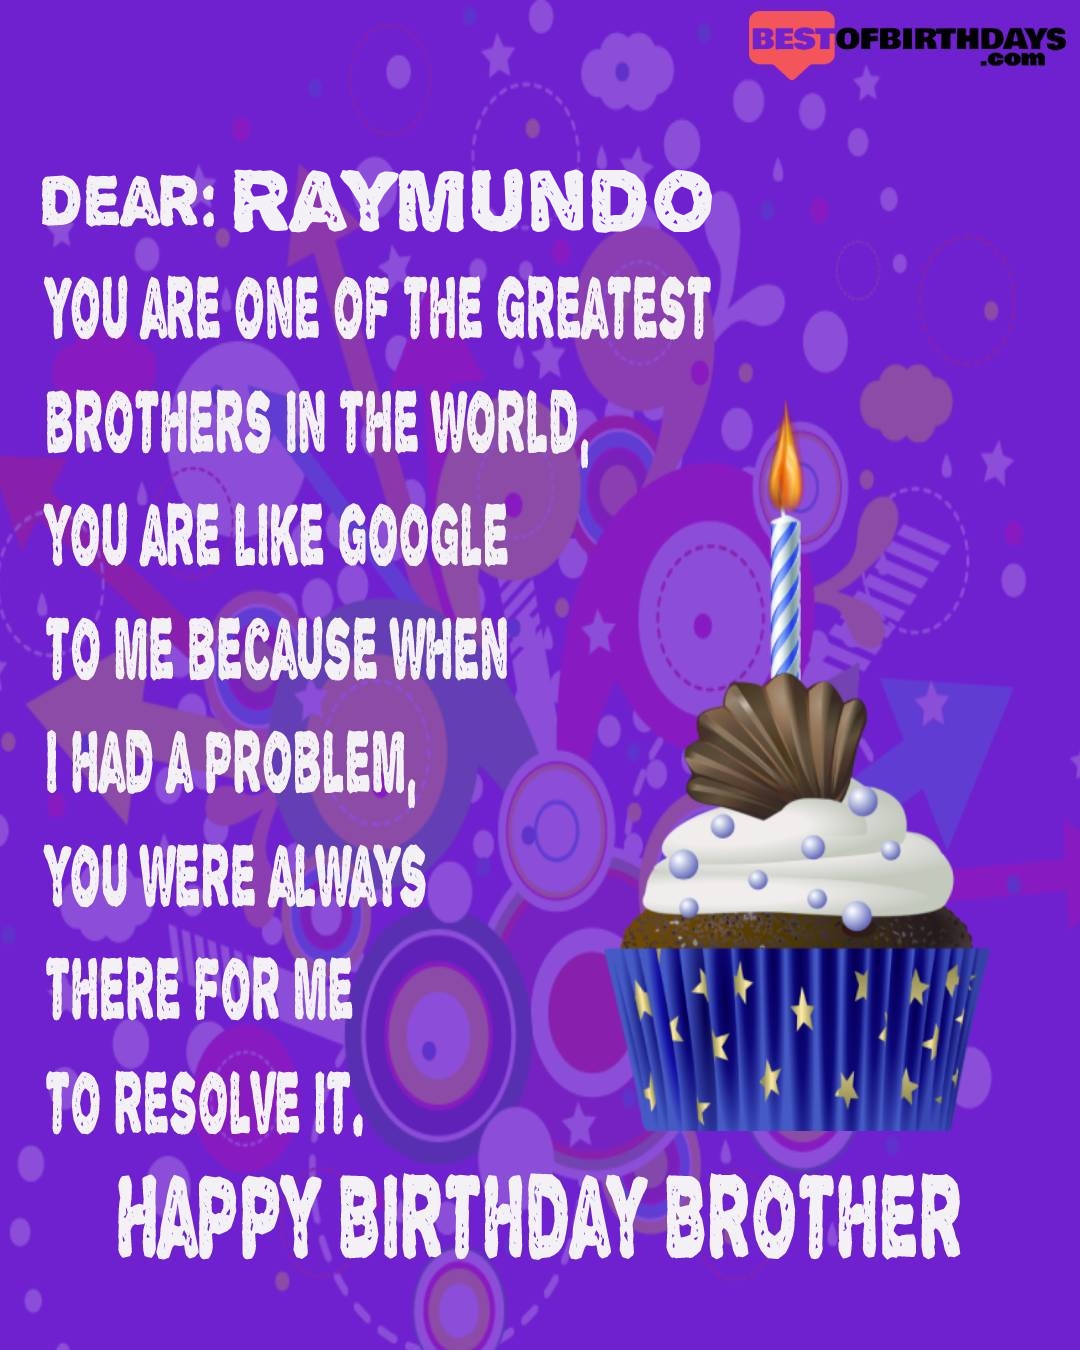 Happy birthday raymundo bhai brother bro